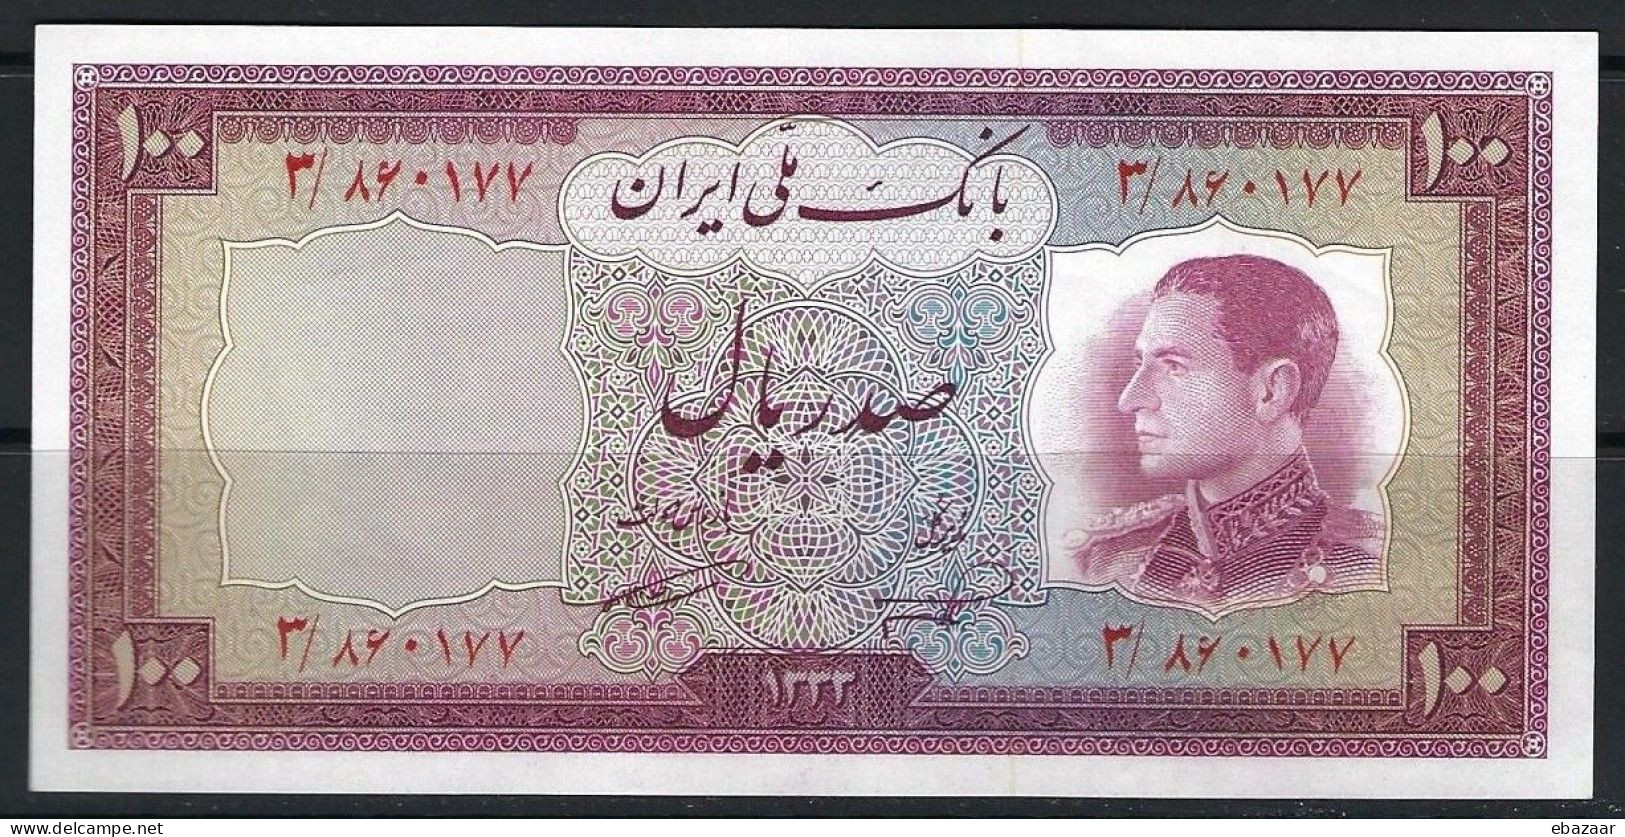 Iran Mohammad Reza Shah 1952 Banknote 100 Rials P-67 UNC - Iran